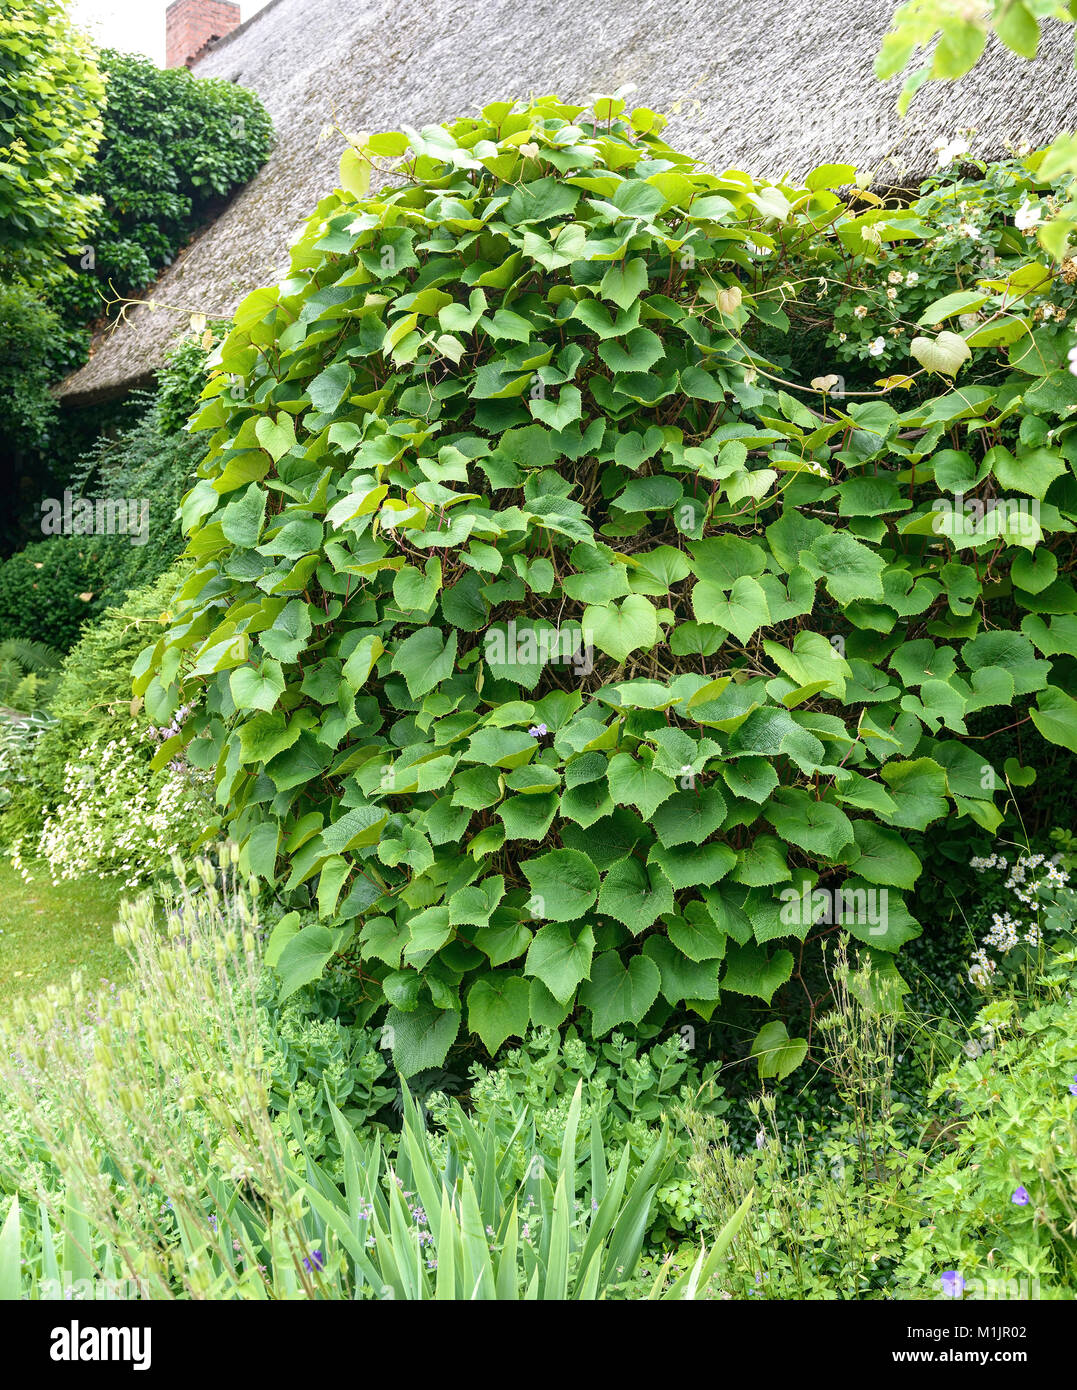 Scarlet Vine (Vitis coignetiae), Scharlach-Rebe (Vitis coignetiae) Stock Photo